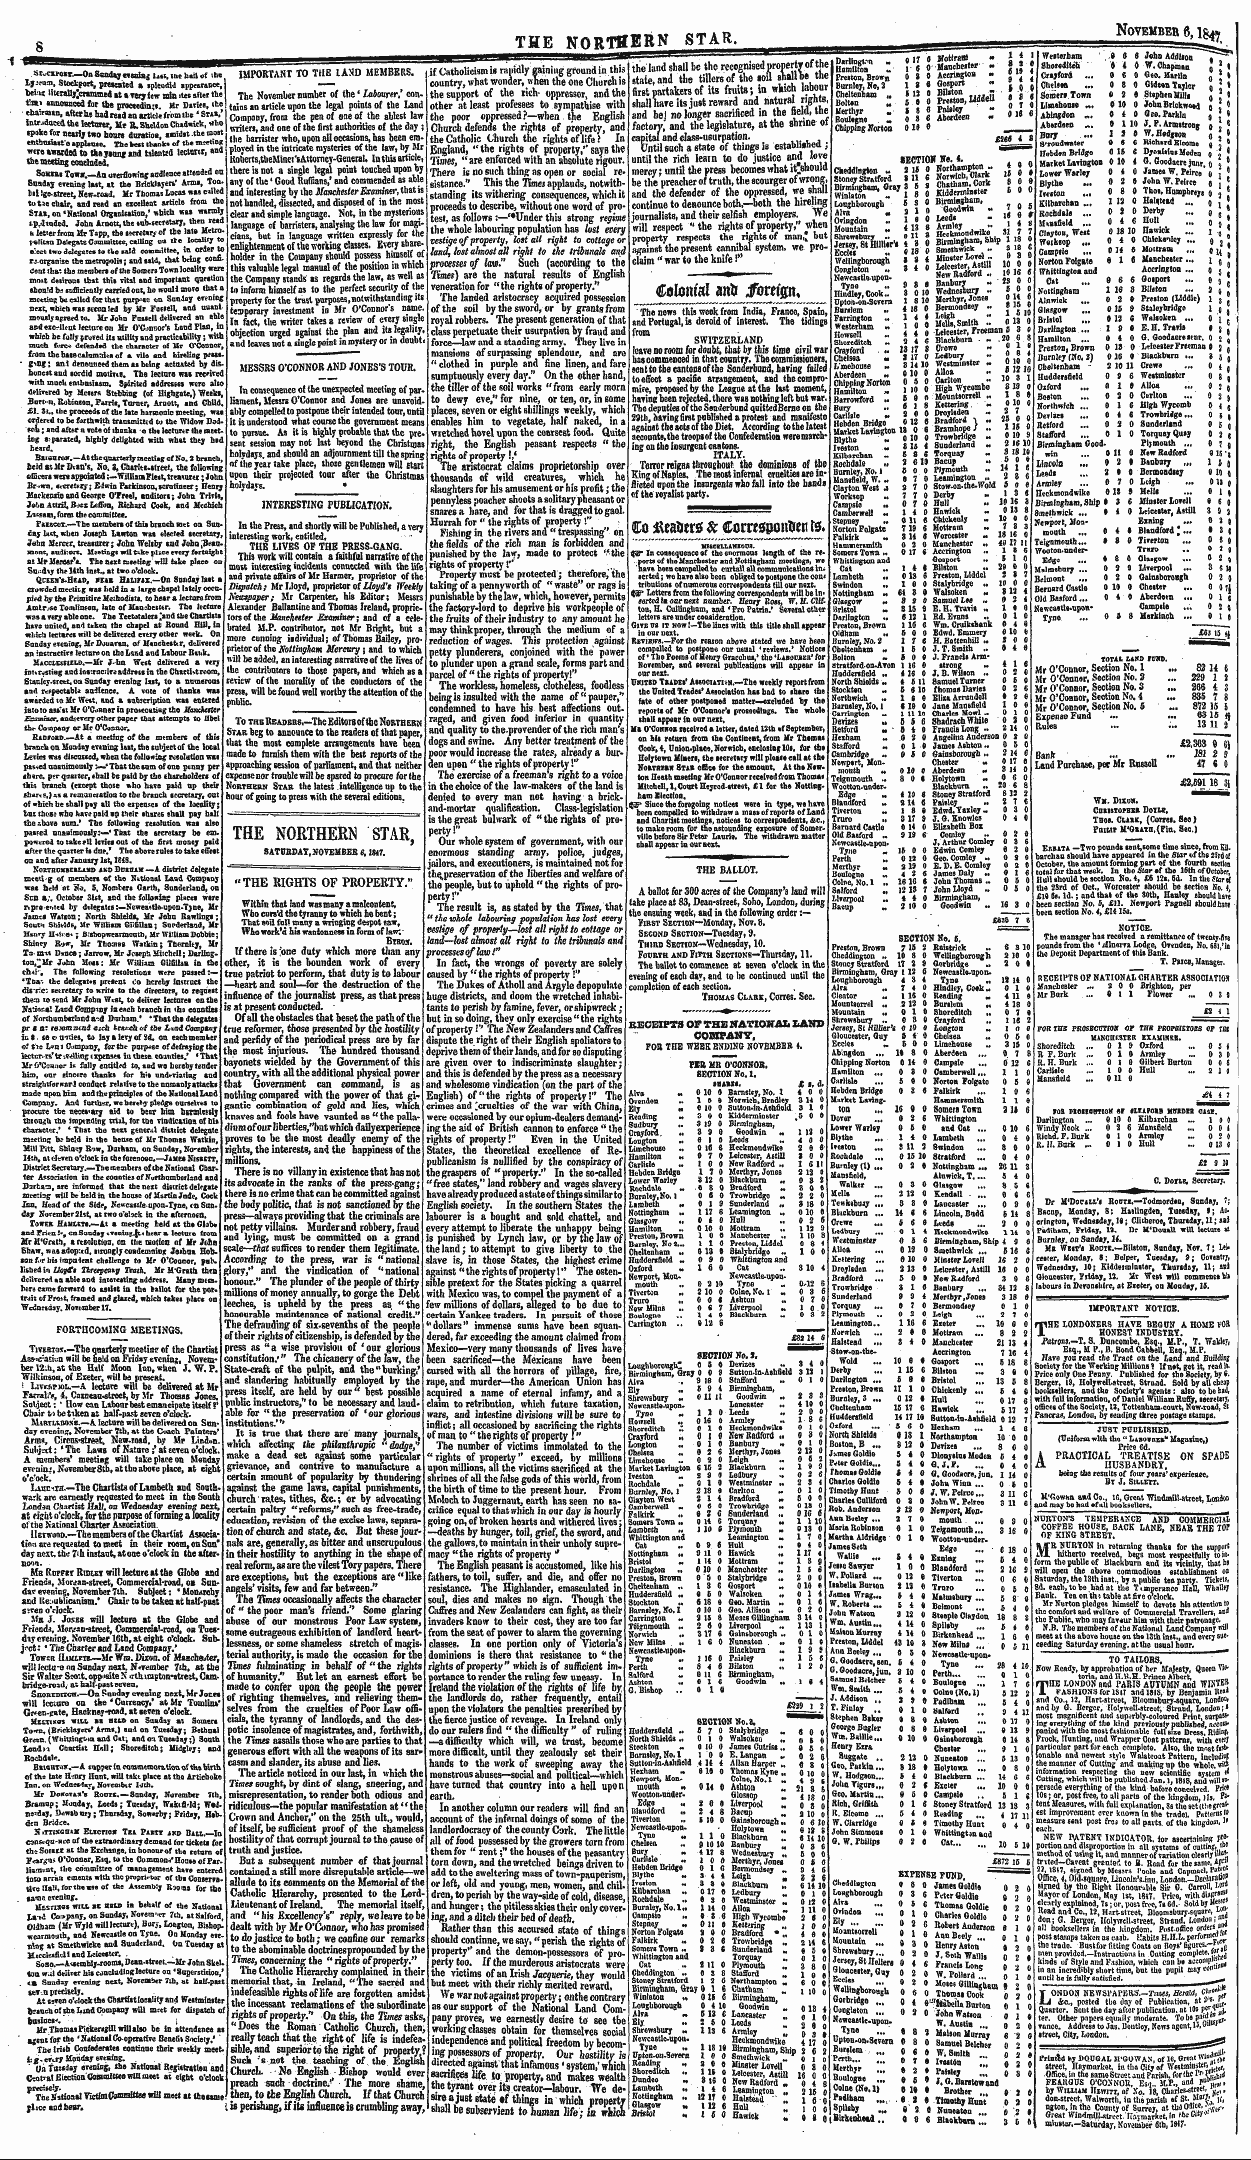 Northern Star (1837-1852): jS F Y, 3rd edition - The Northern Star, Saturday, Novembeb 6,1847.